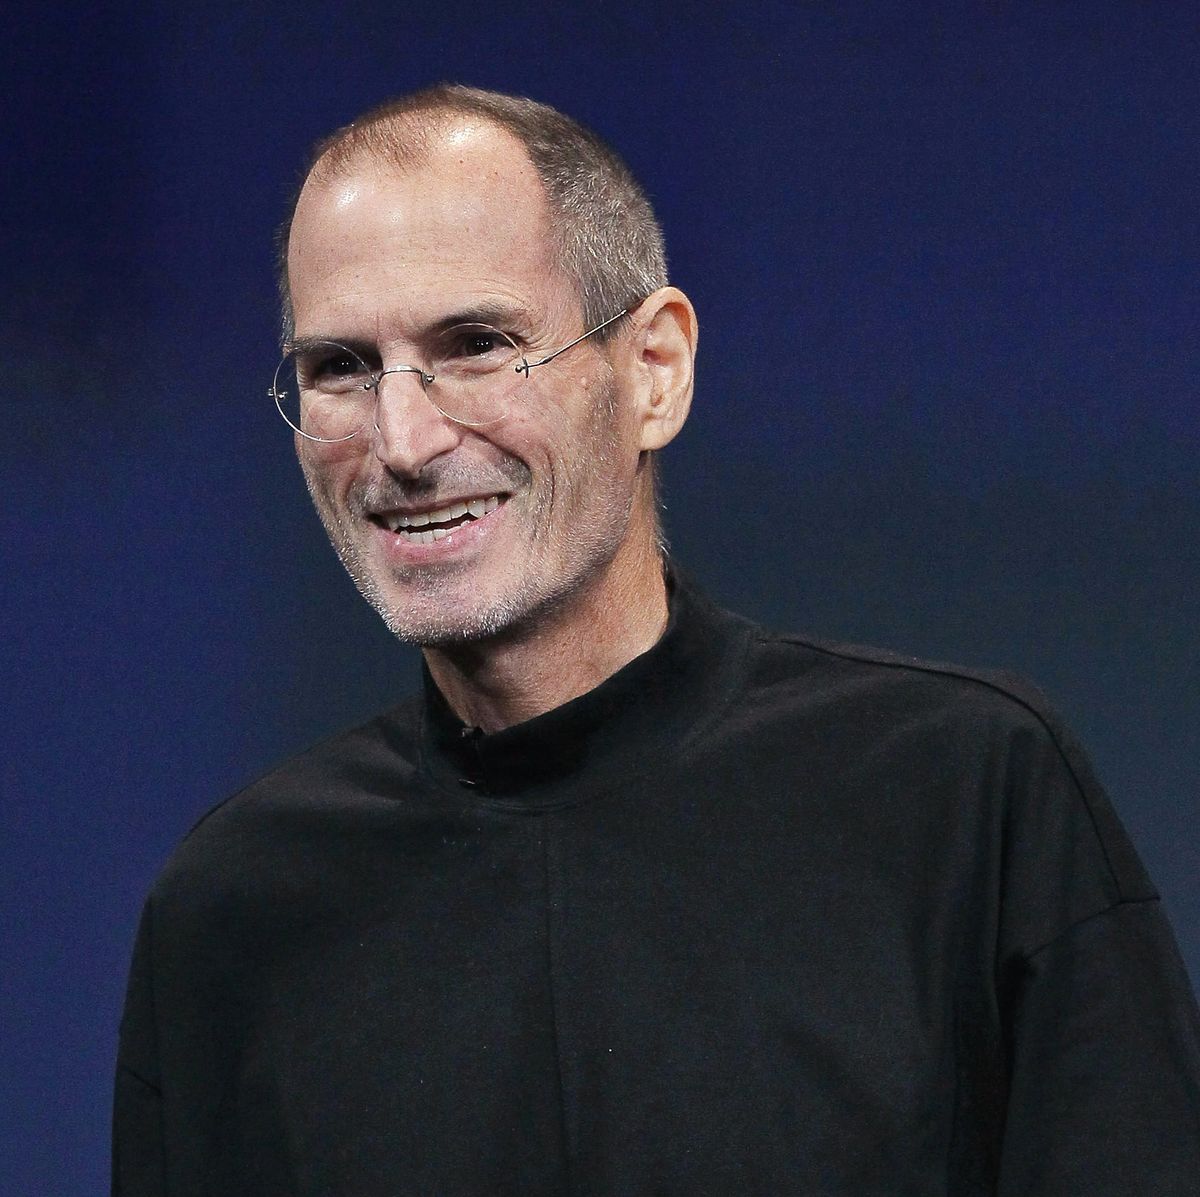 Steve Jobs Biography, Education, Net Worth, Apple, & Facts